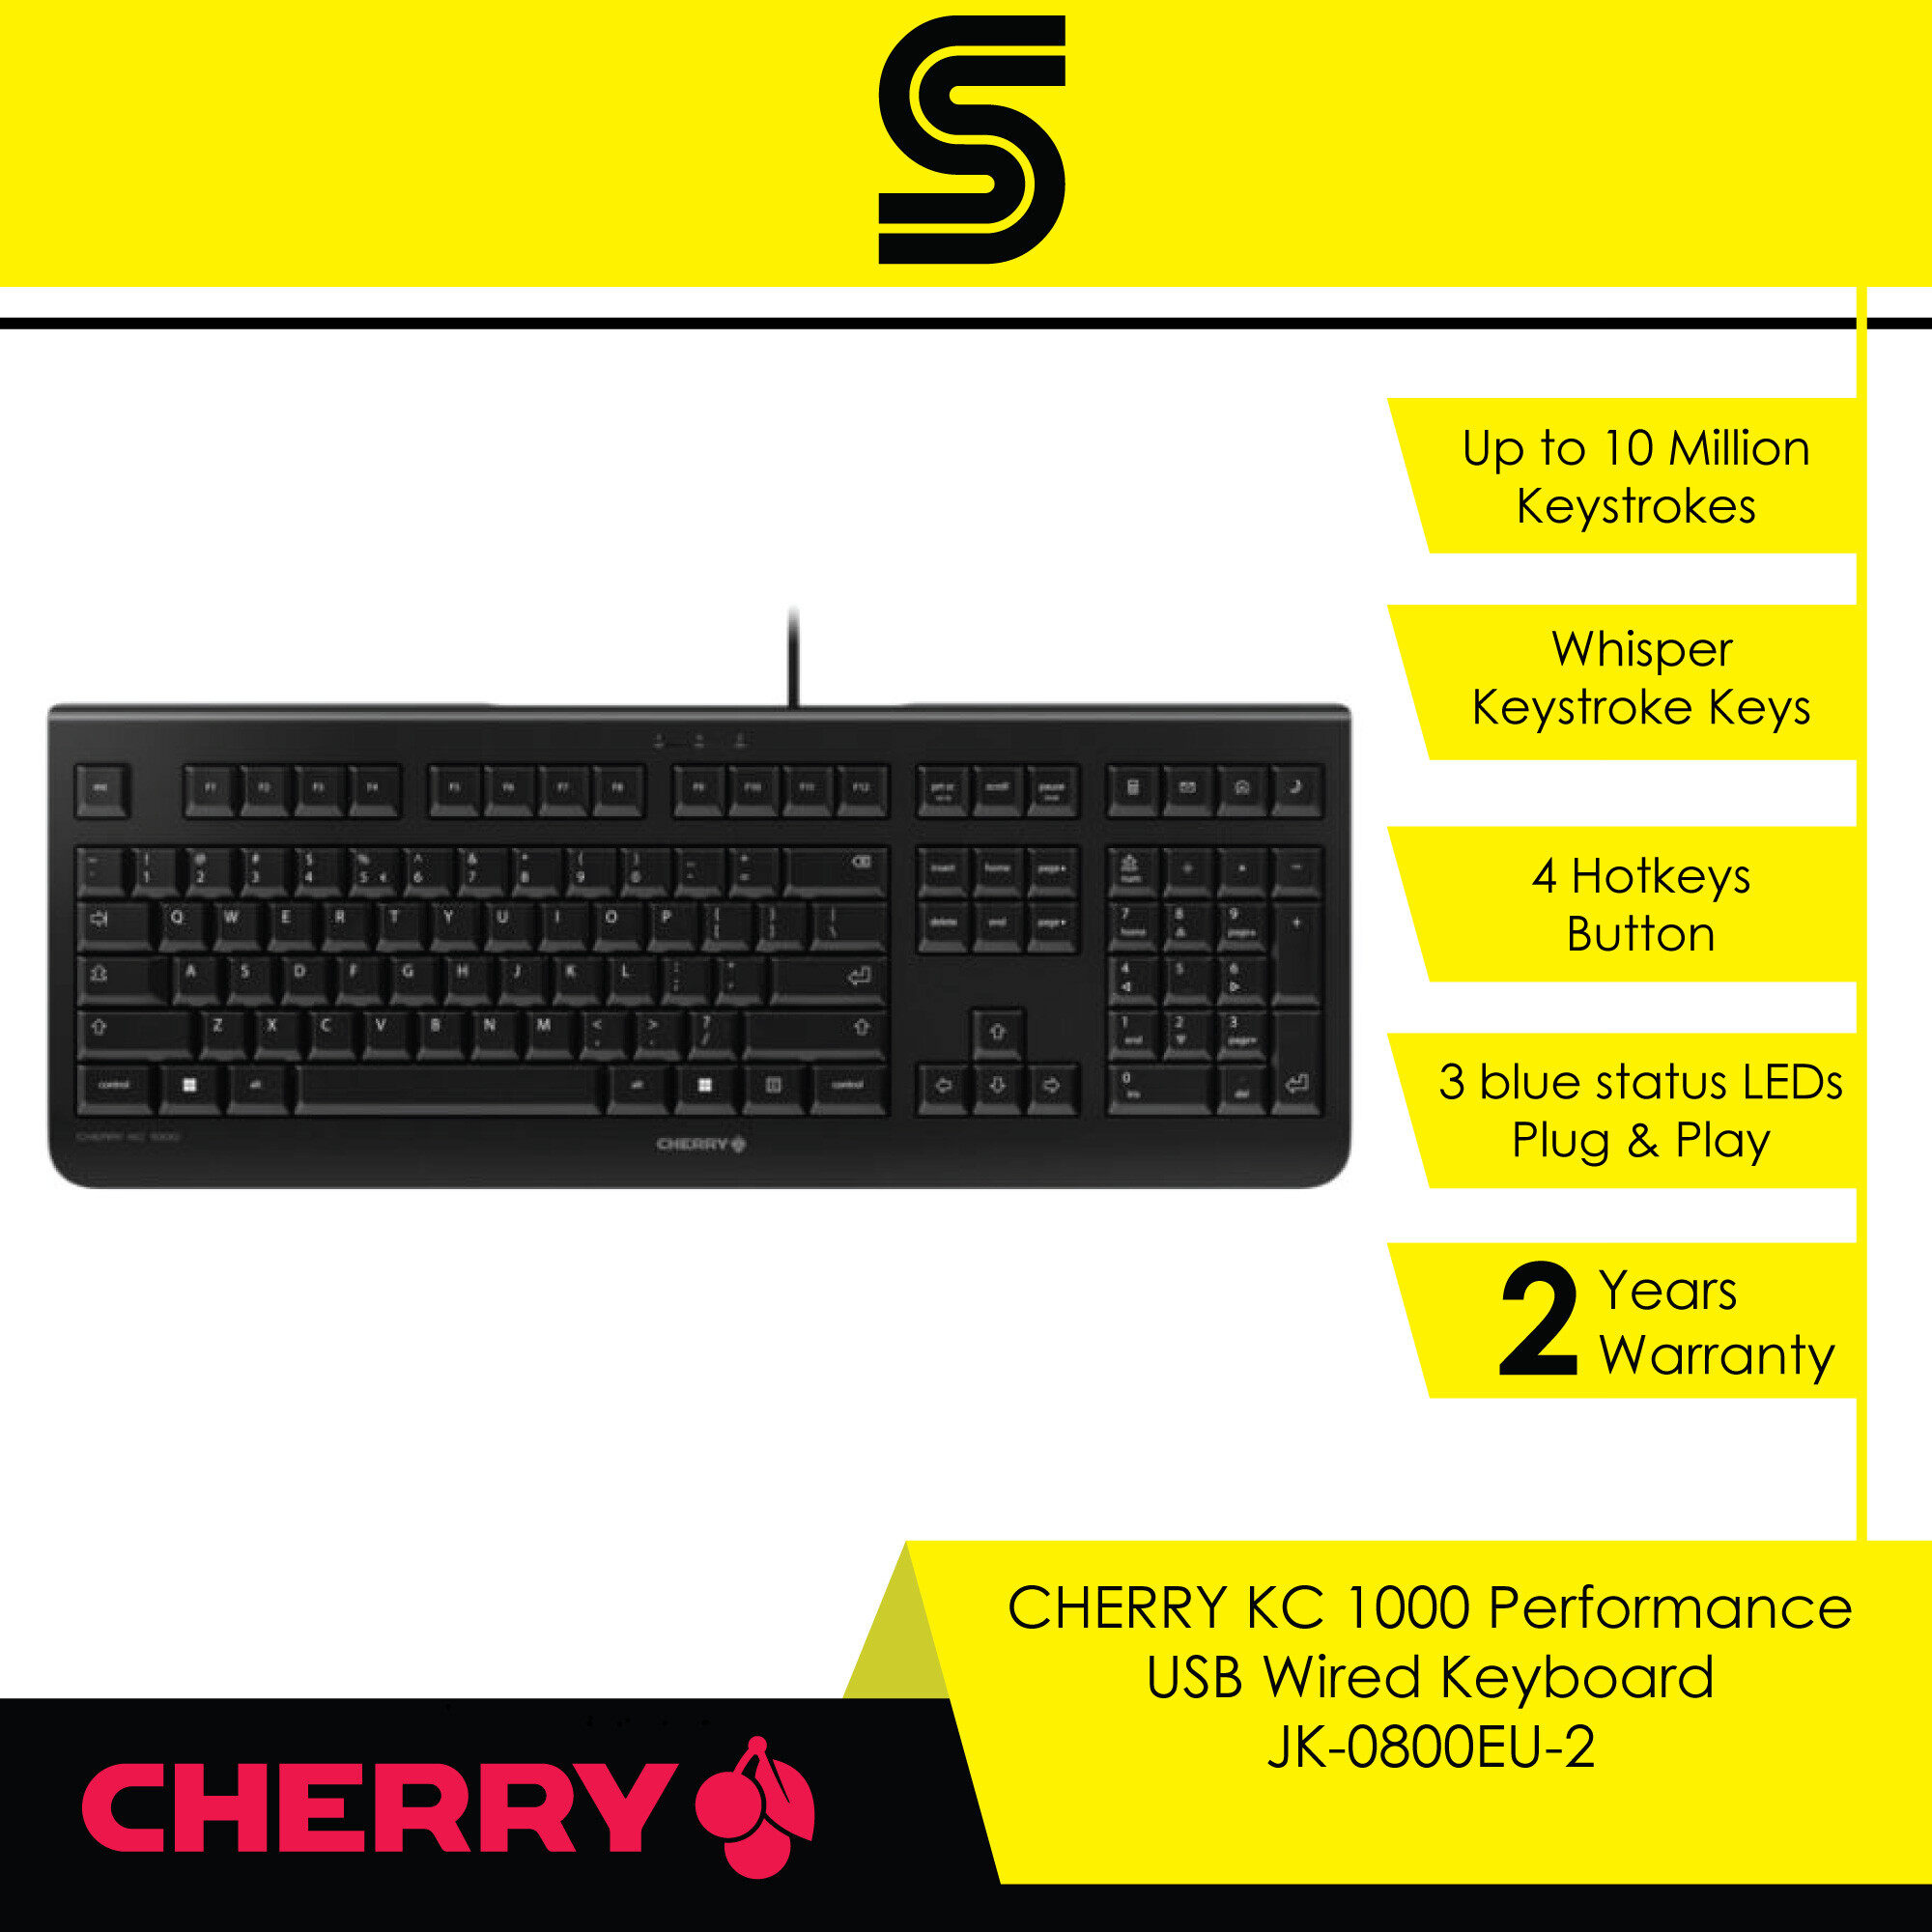 CHERRY KC 1000 Performance USB Wired Keyboard - JK-0800EU-2